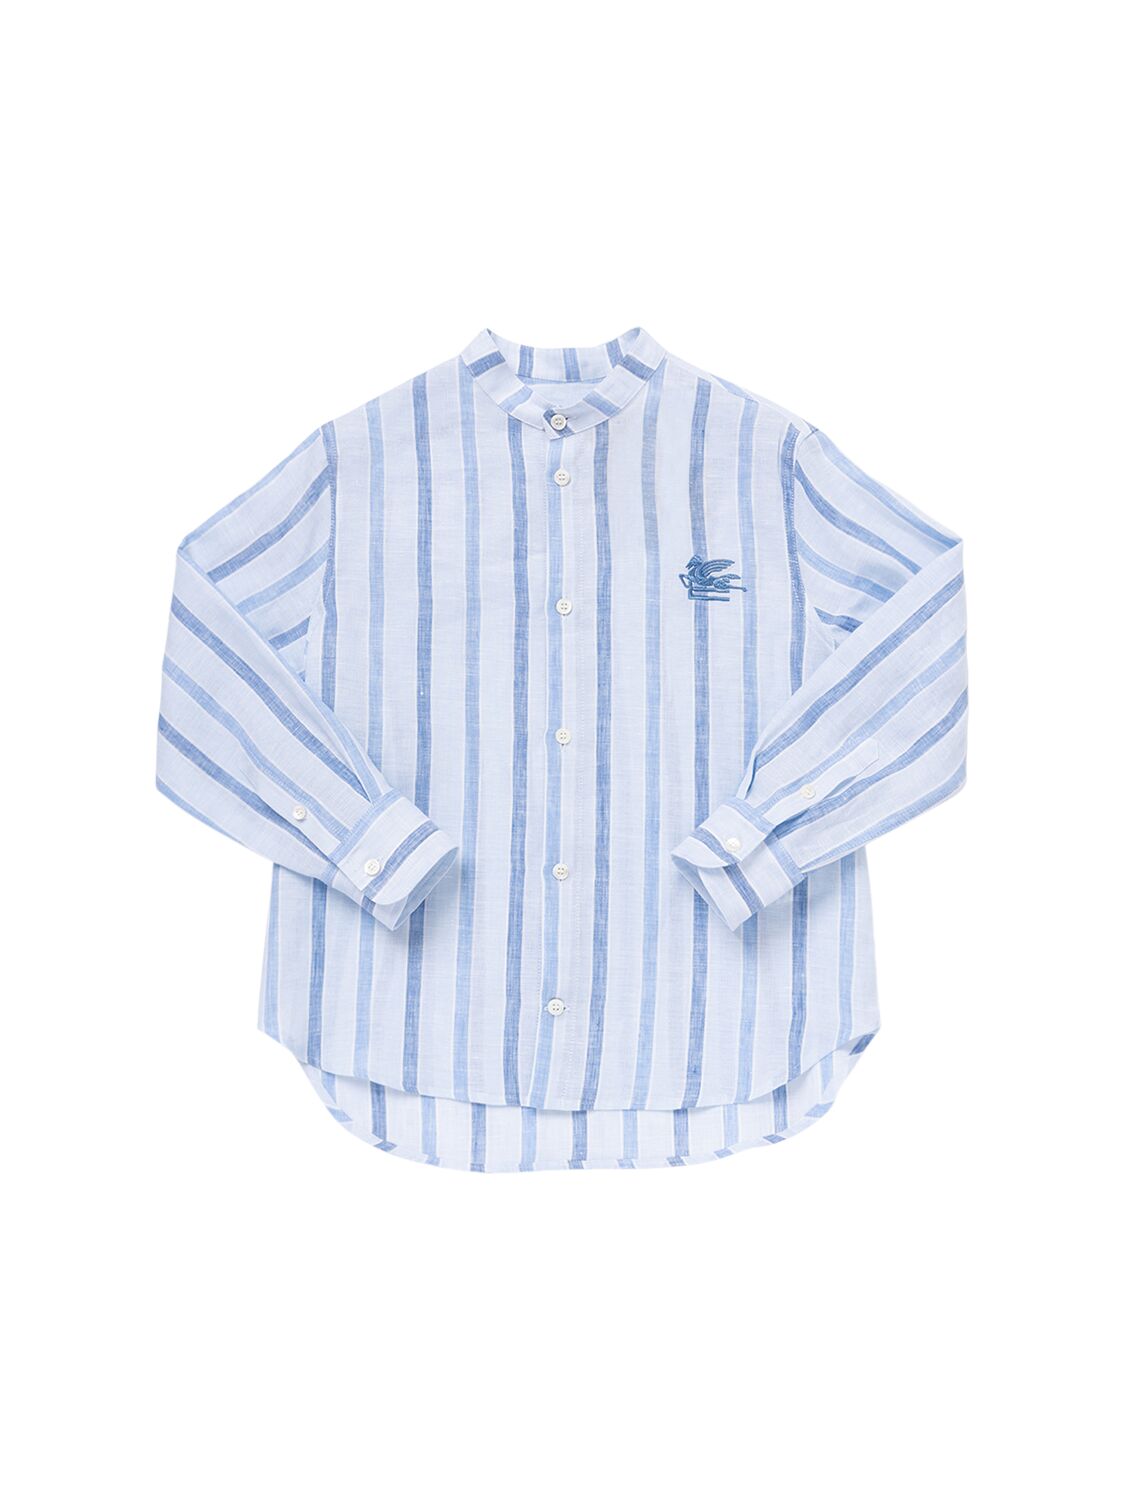 Image of Striped Linen Cloth Suit Shirt